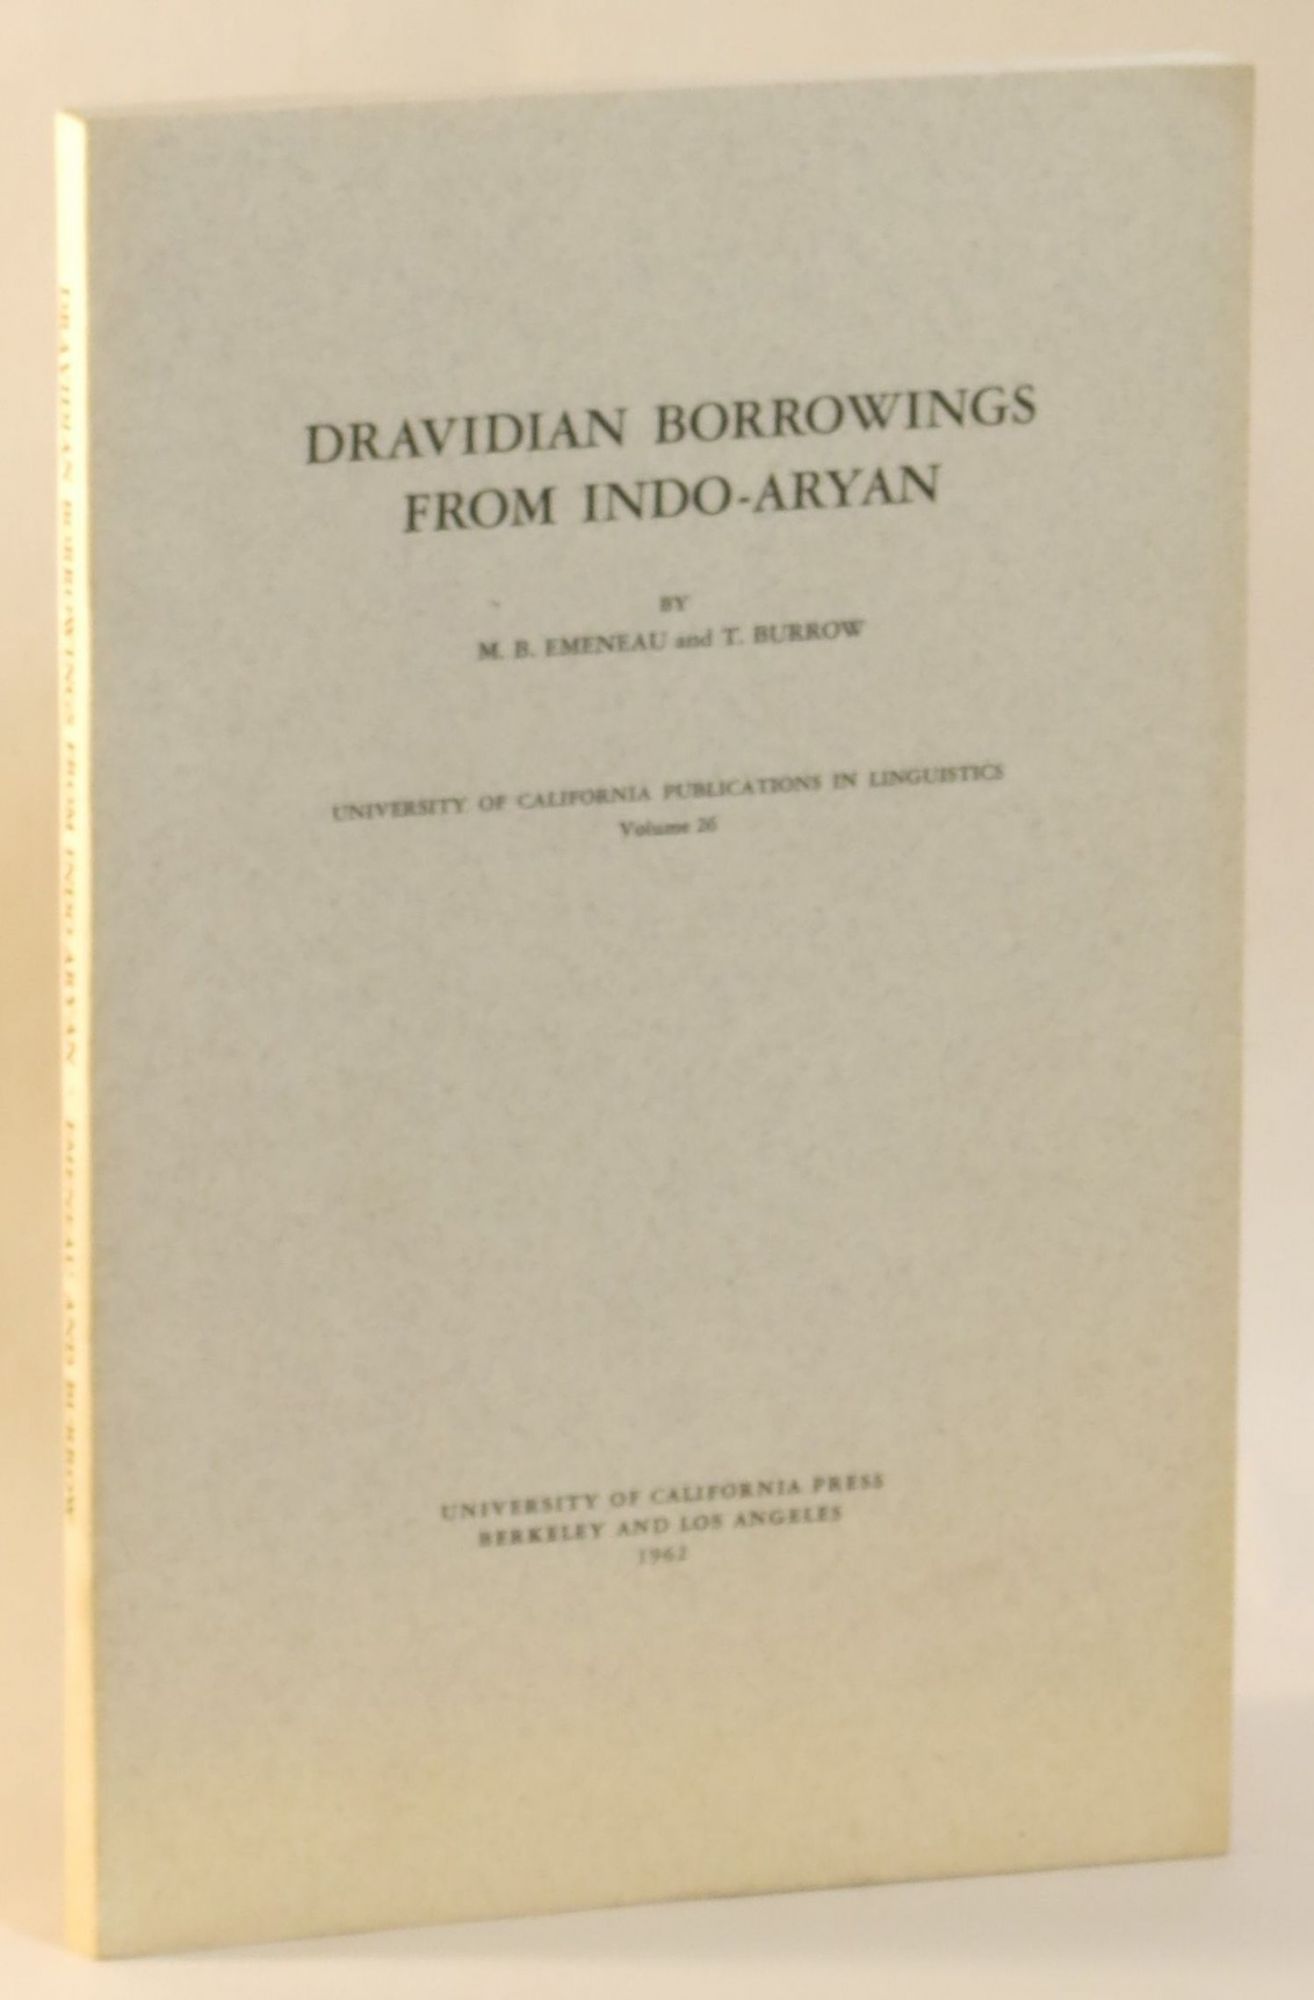 Dravidian Borrowings from Indo-Aryan - Emeneau, M. B. and T. Burrow